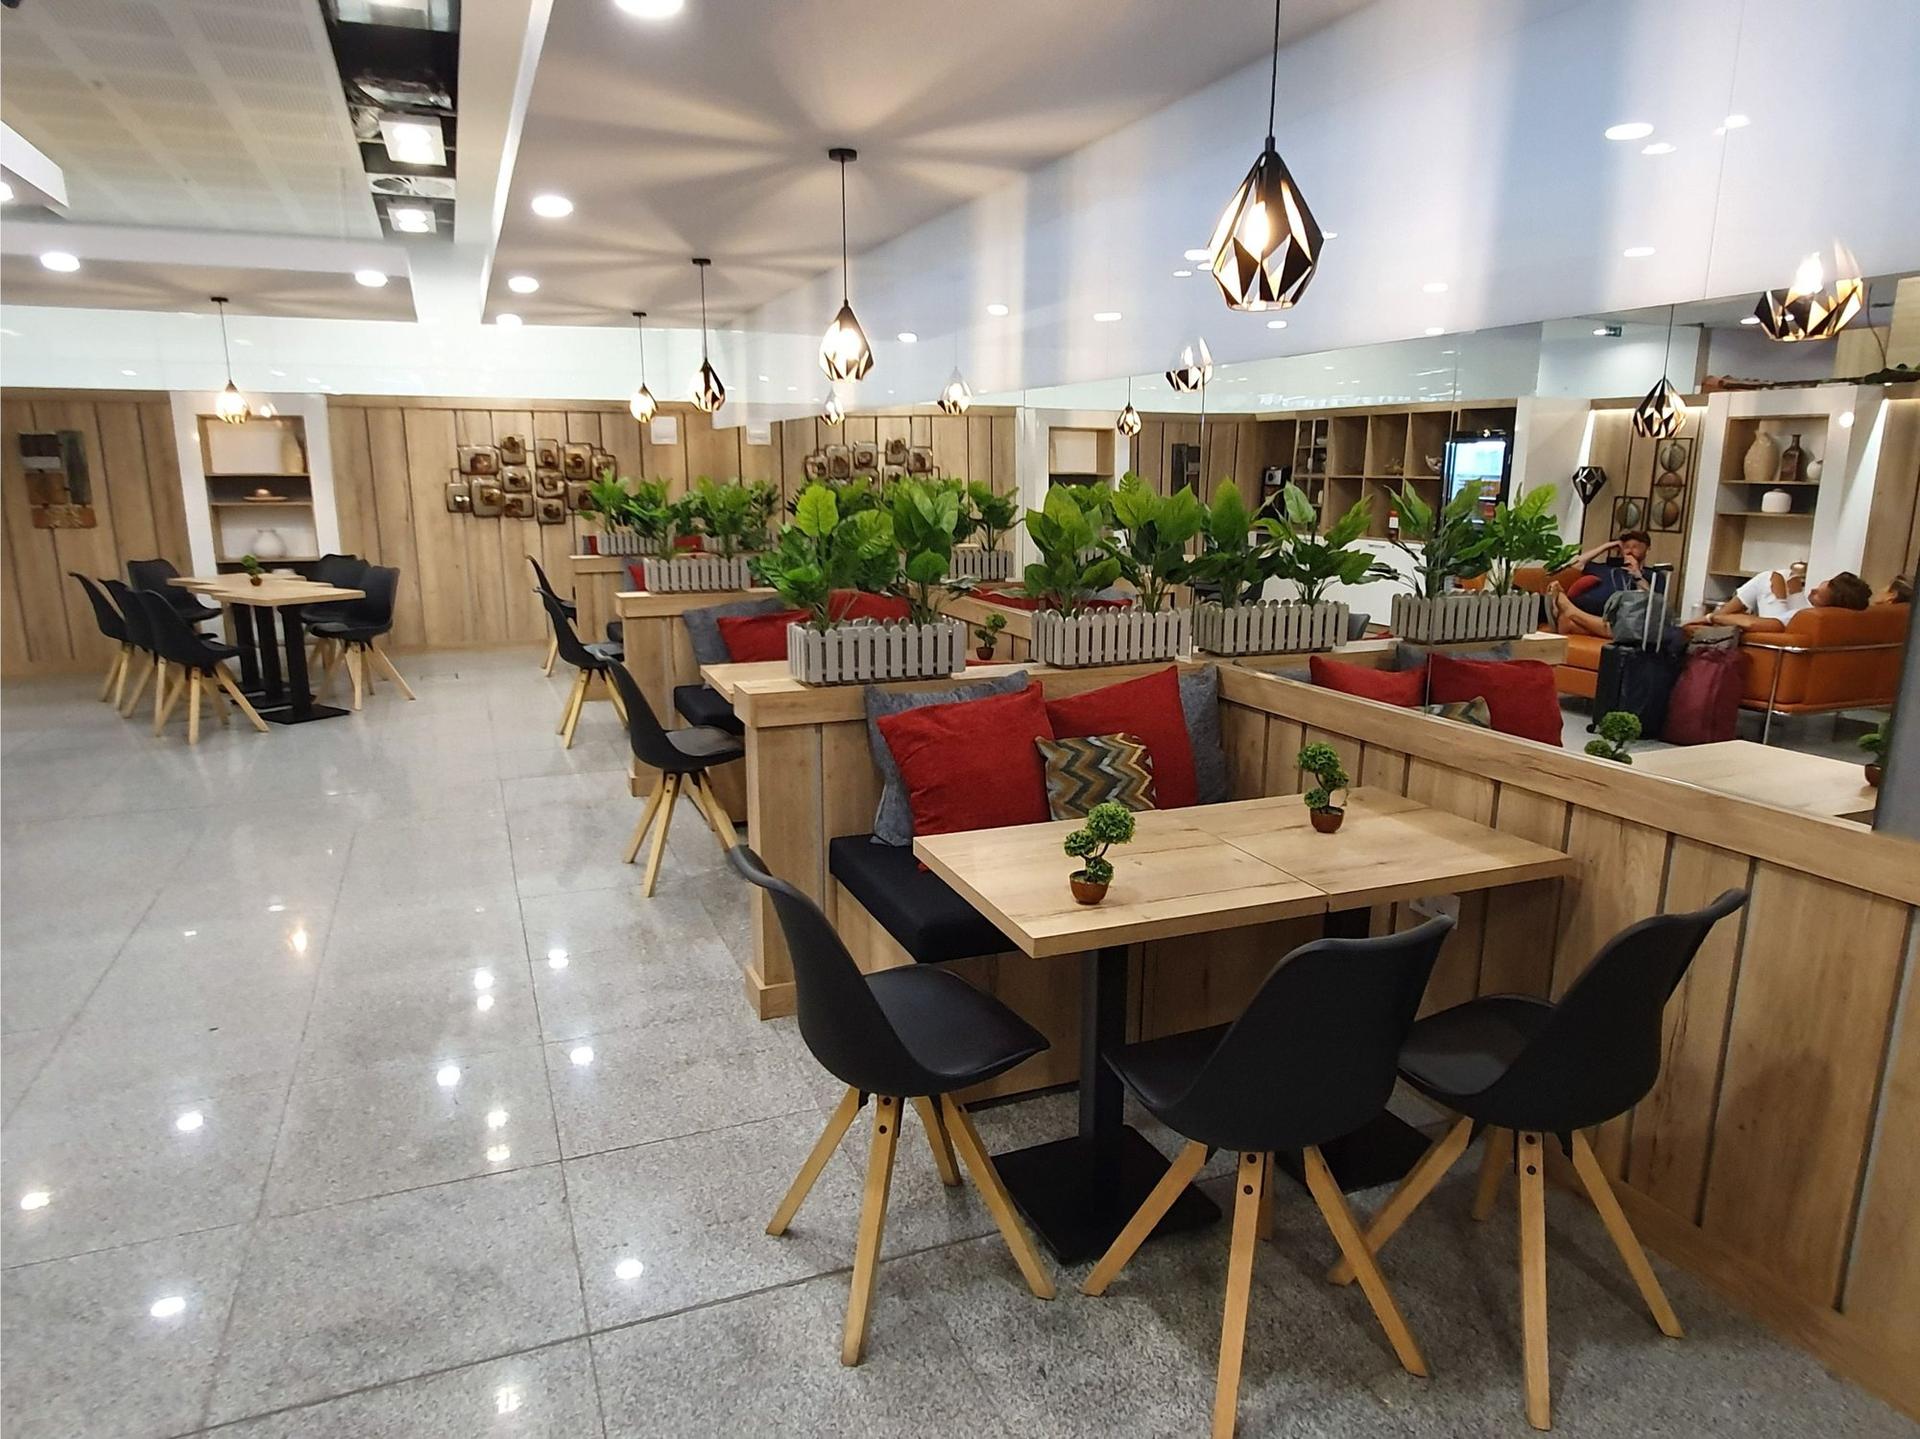 Burgas Airport Lounge image 21 of 43